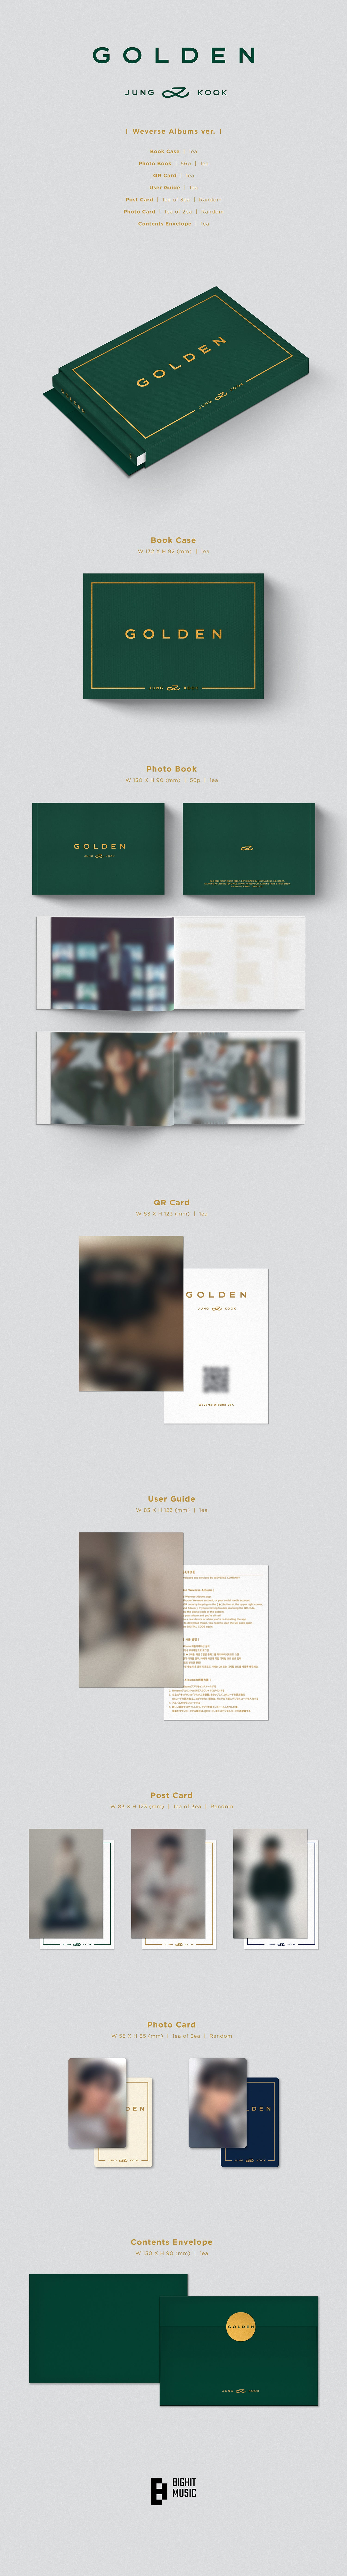 [PRE-ORDER] BTS JUNGKOOK - Solo Album GOLDEN 정국 솔로앨범 bts 방탄소년단 south korea giveaway kpopalbum shop store maknae 골든 위버스 weverse